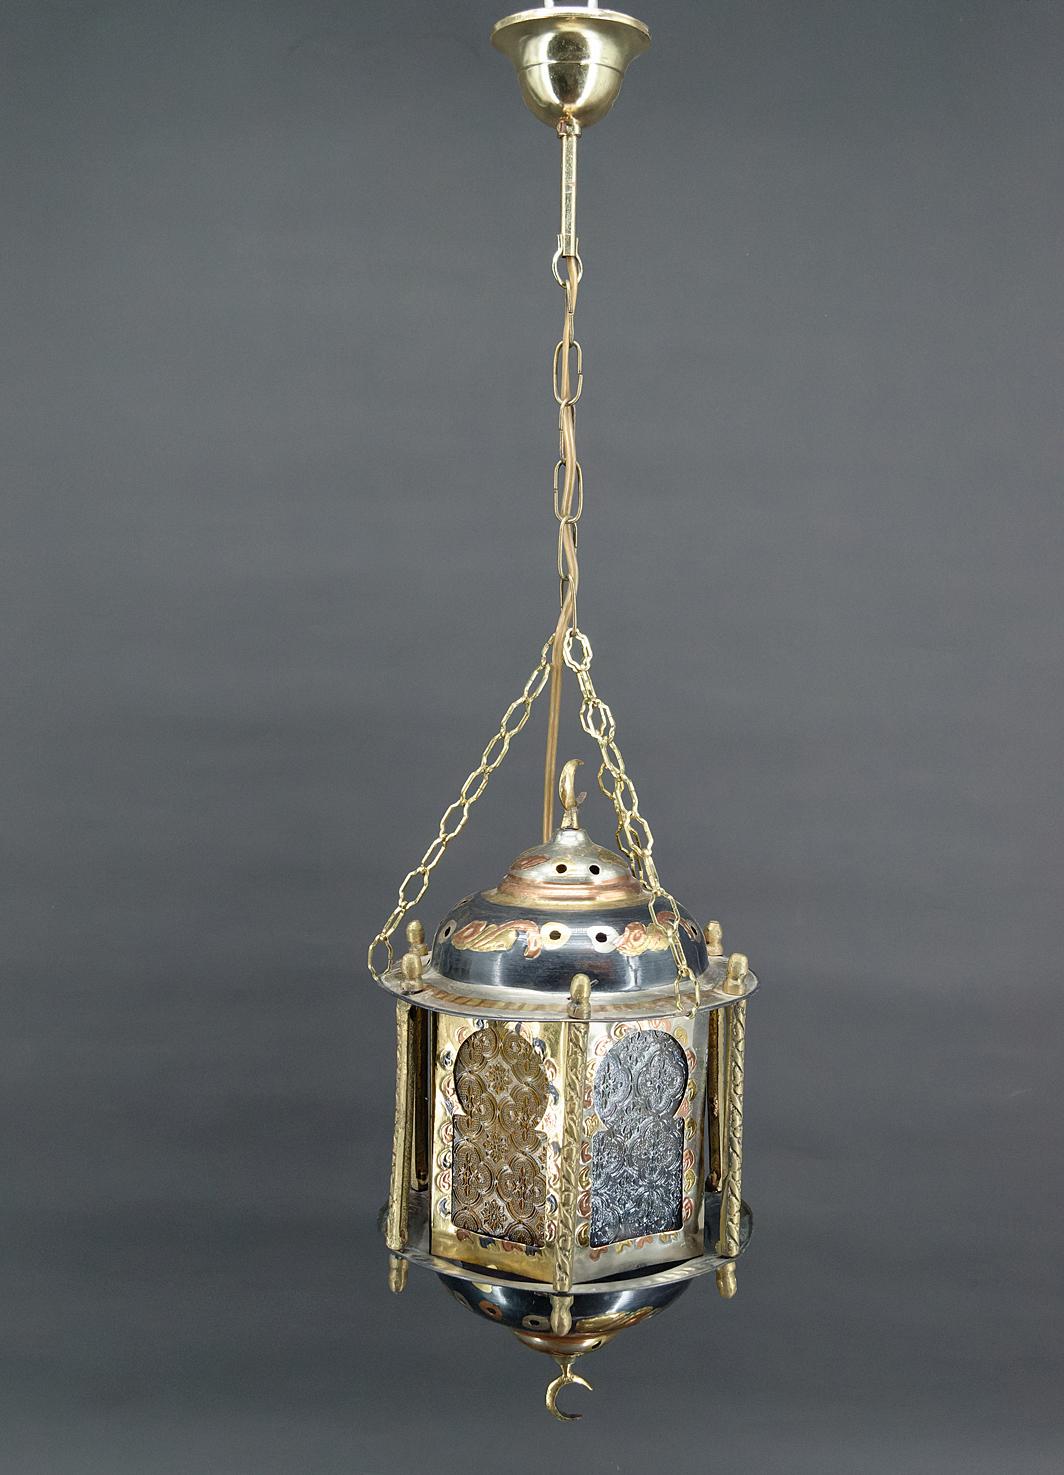 Moorish lantern in brass and colored glass.
Moorish / Islamic / Boho style.
North Africa, 20th century.

In good condition.

Dimensions:
height 86 cm
diameter 26 cm